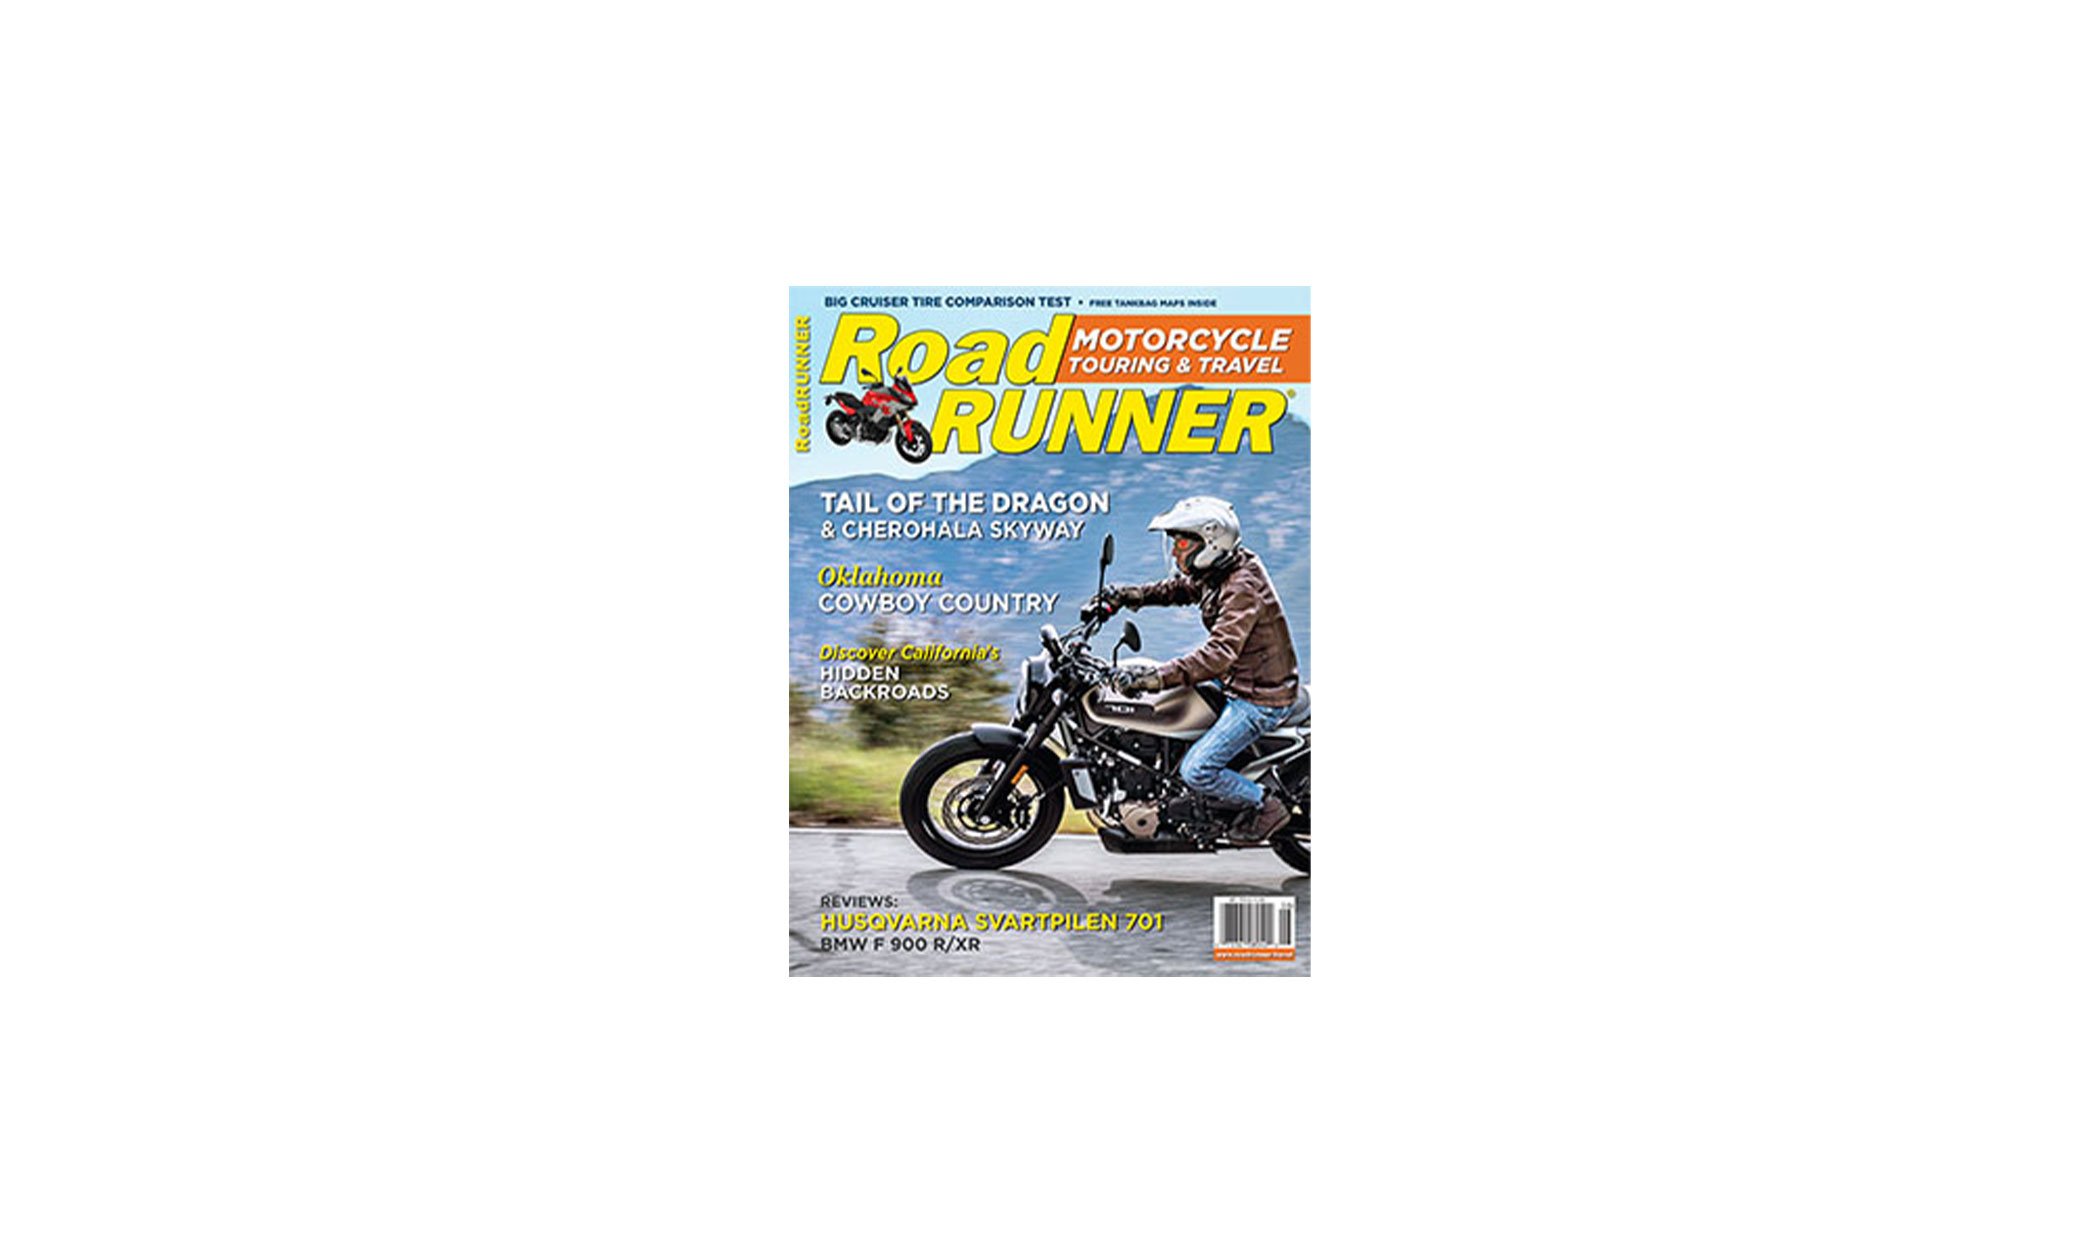 Claim Your FREE RoadRUNNER Motorcycle Touring & Travel Magazine! 